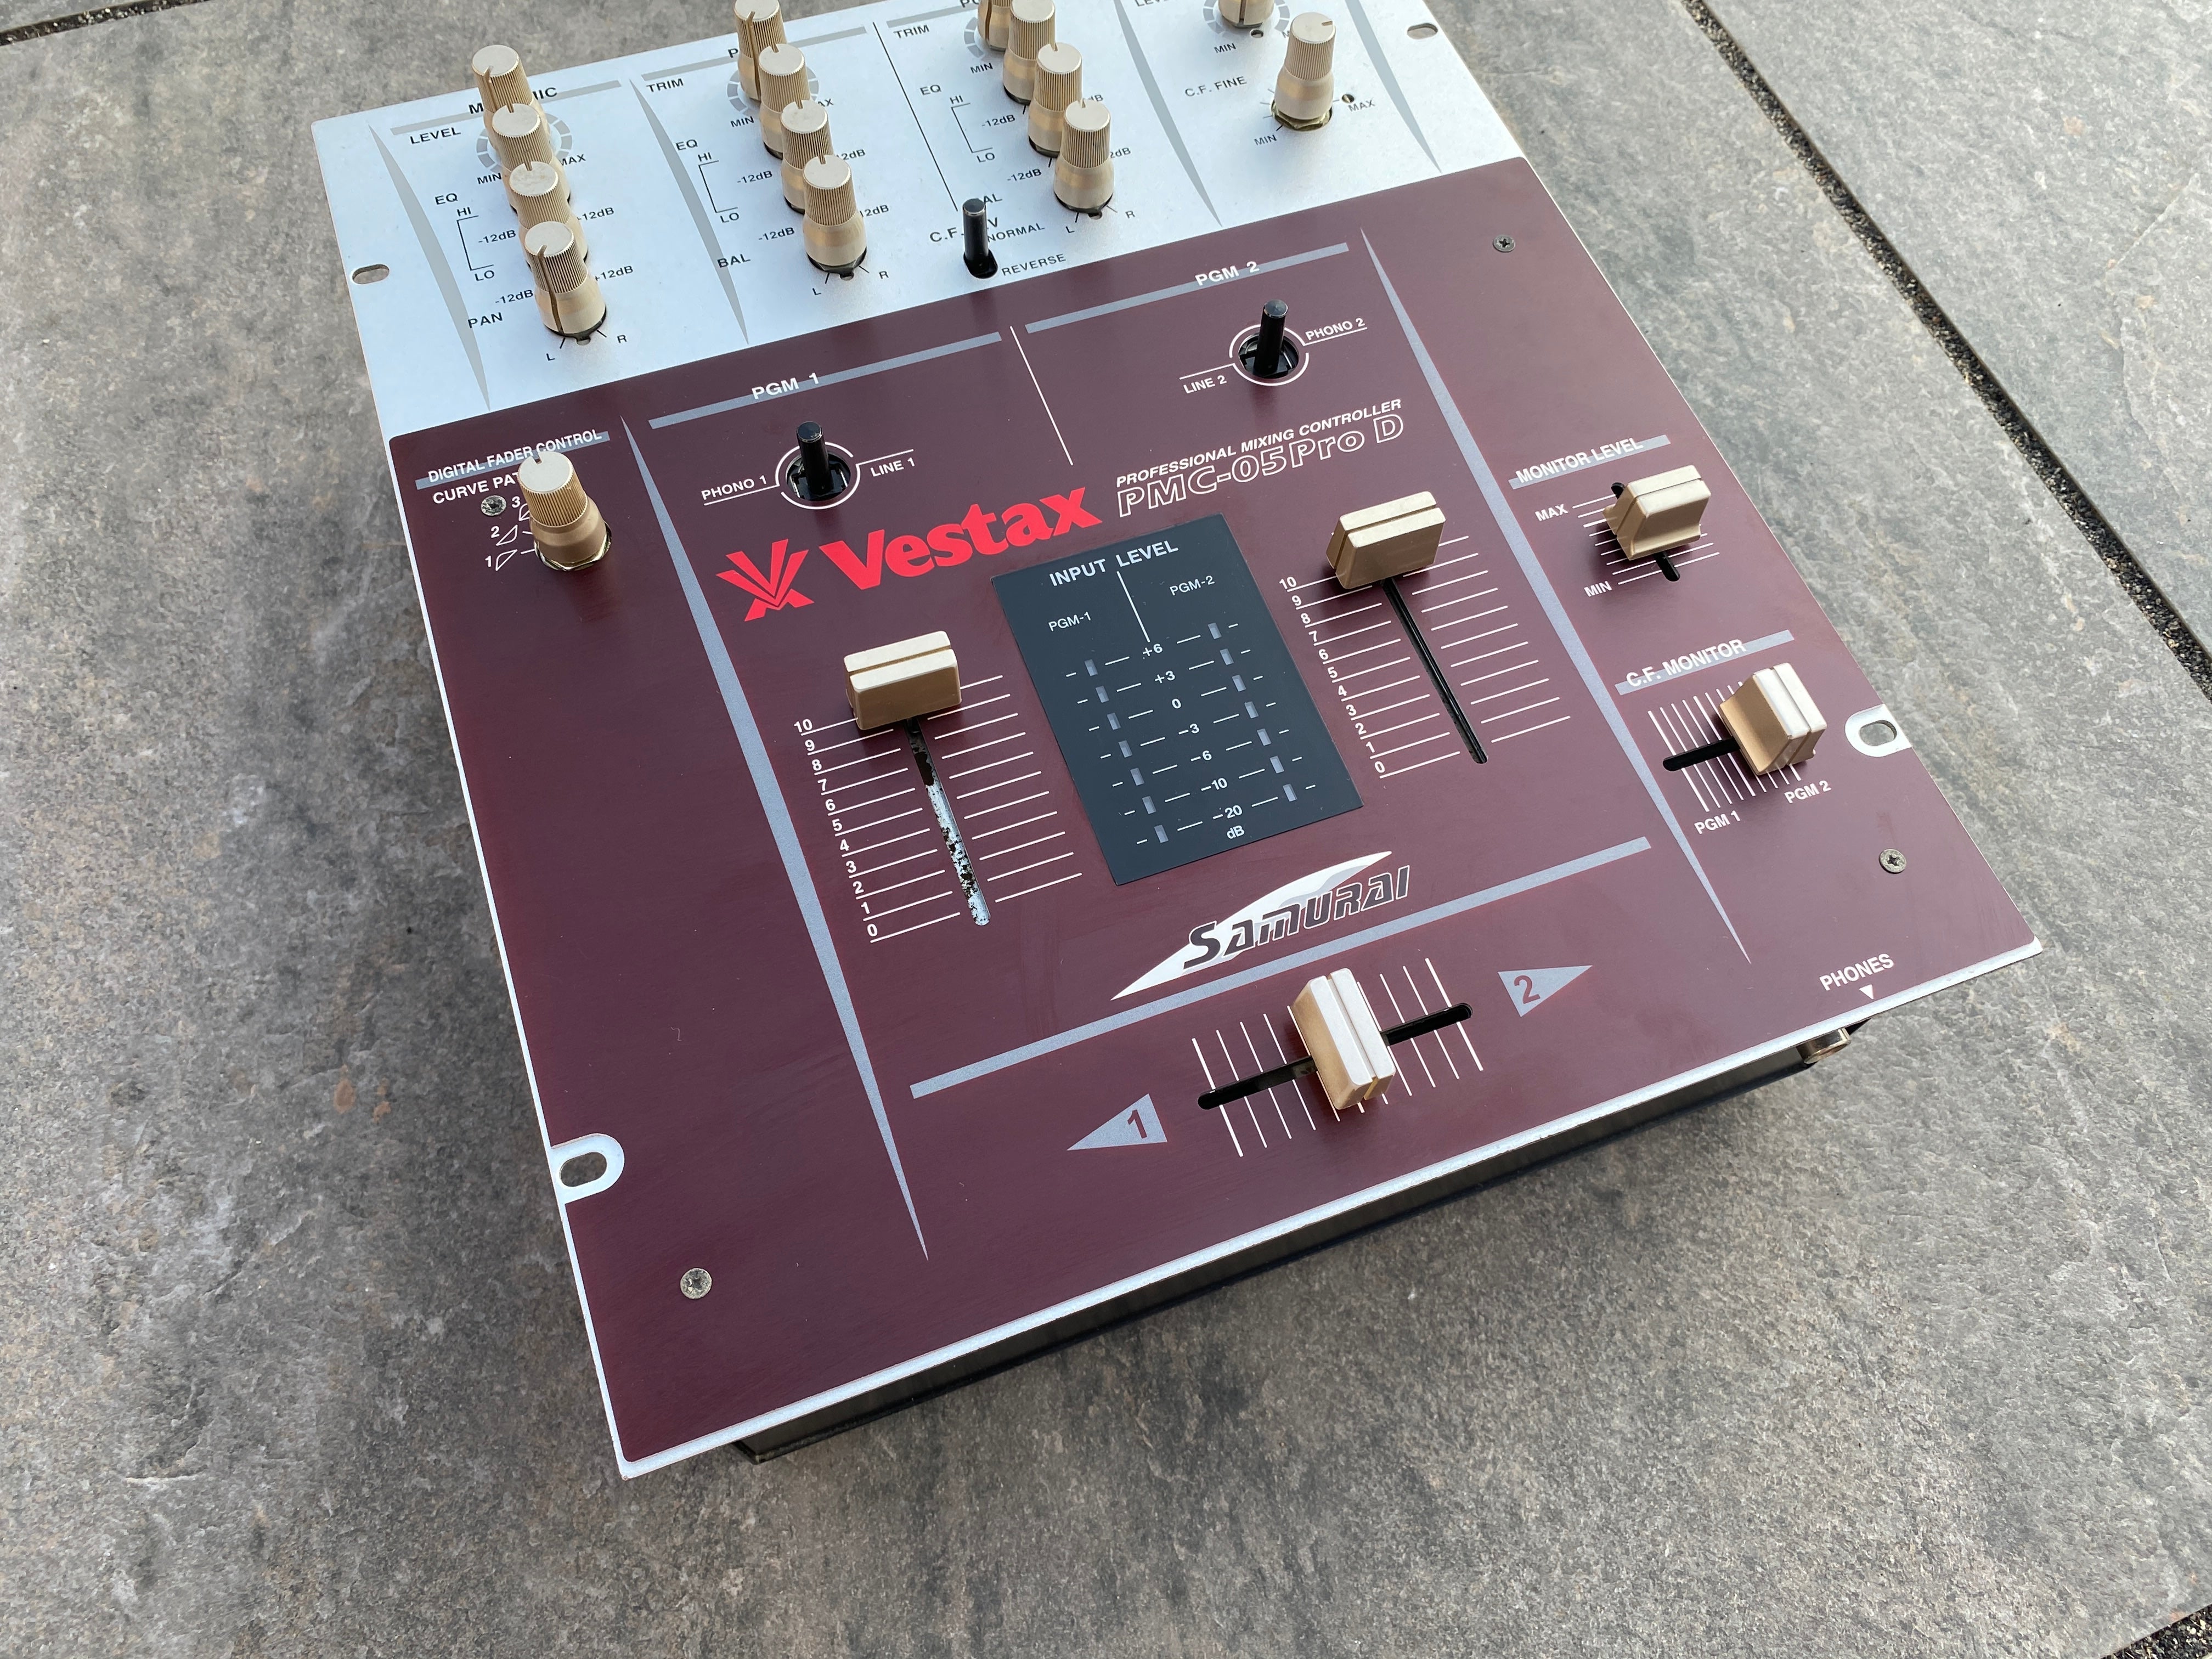 Vestax PMC-05 Pro D Samurai Mixer – MixerRemix